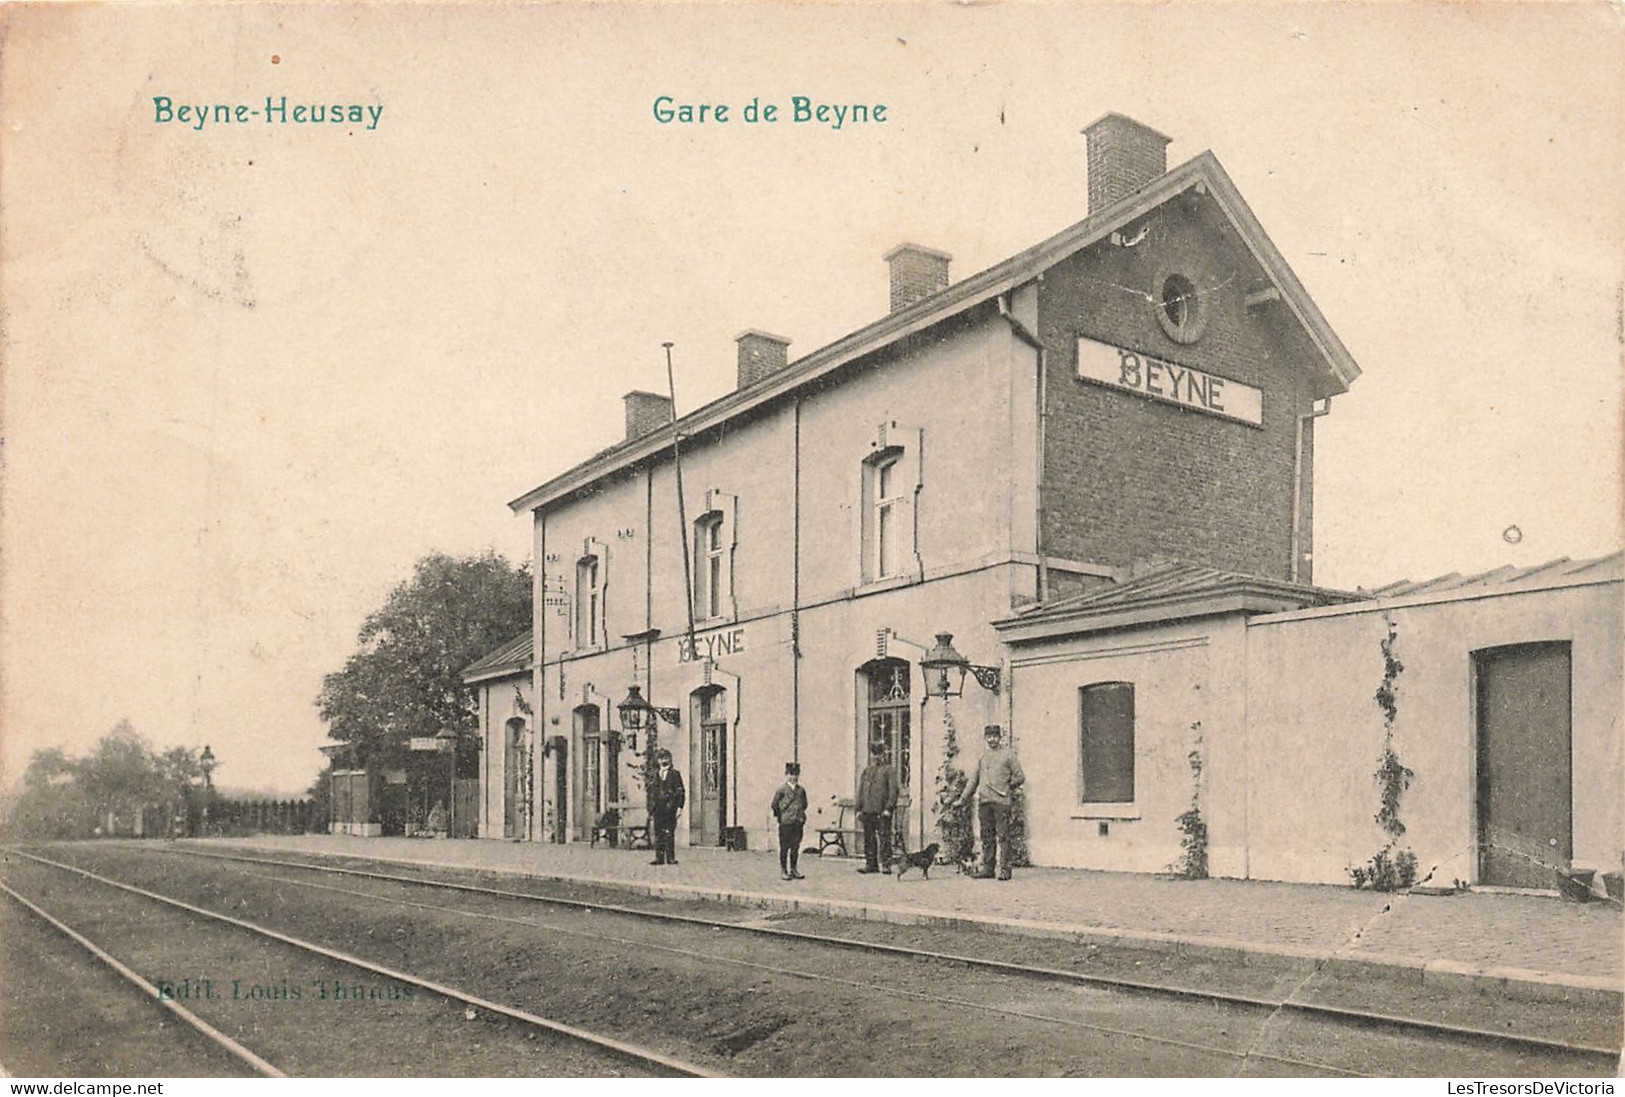 CPA - Belgique - Beyne Heusay - Gare De Beyne - Edit. Louis Thunus - Animé - Oblitéré Beyne Heusay 1911 - Beyne-Heusay